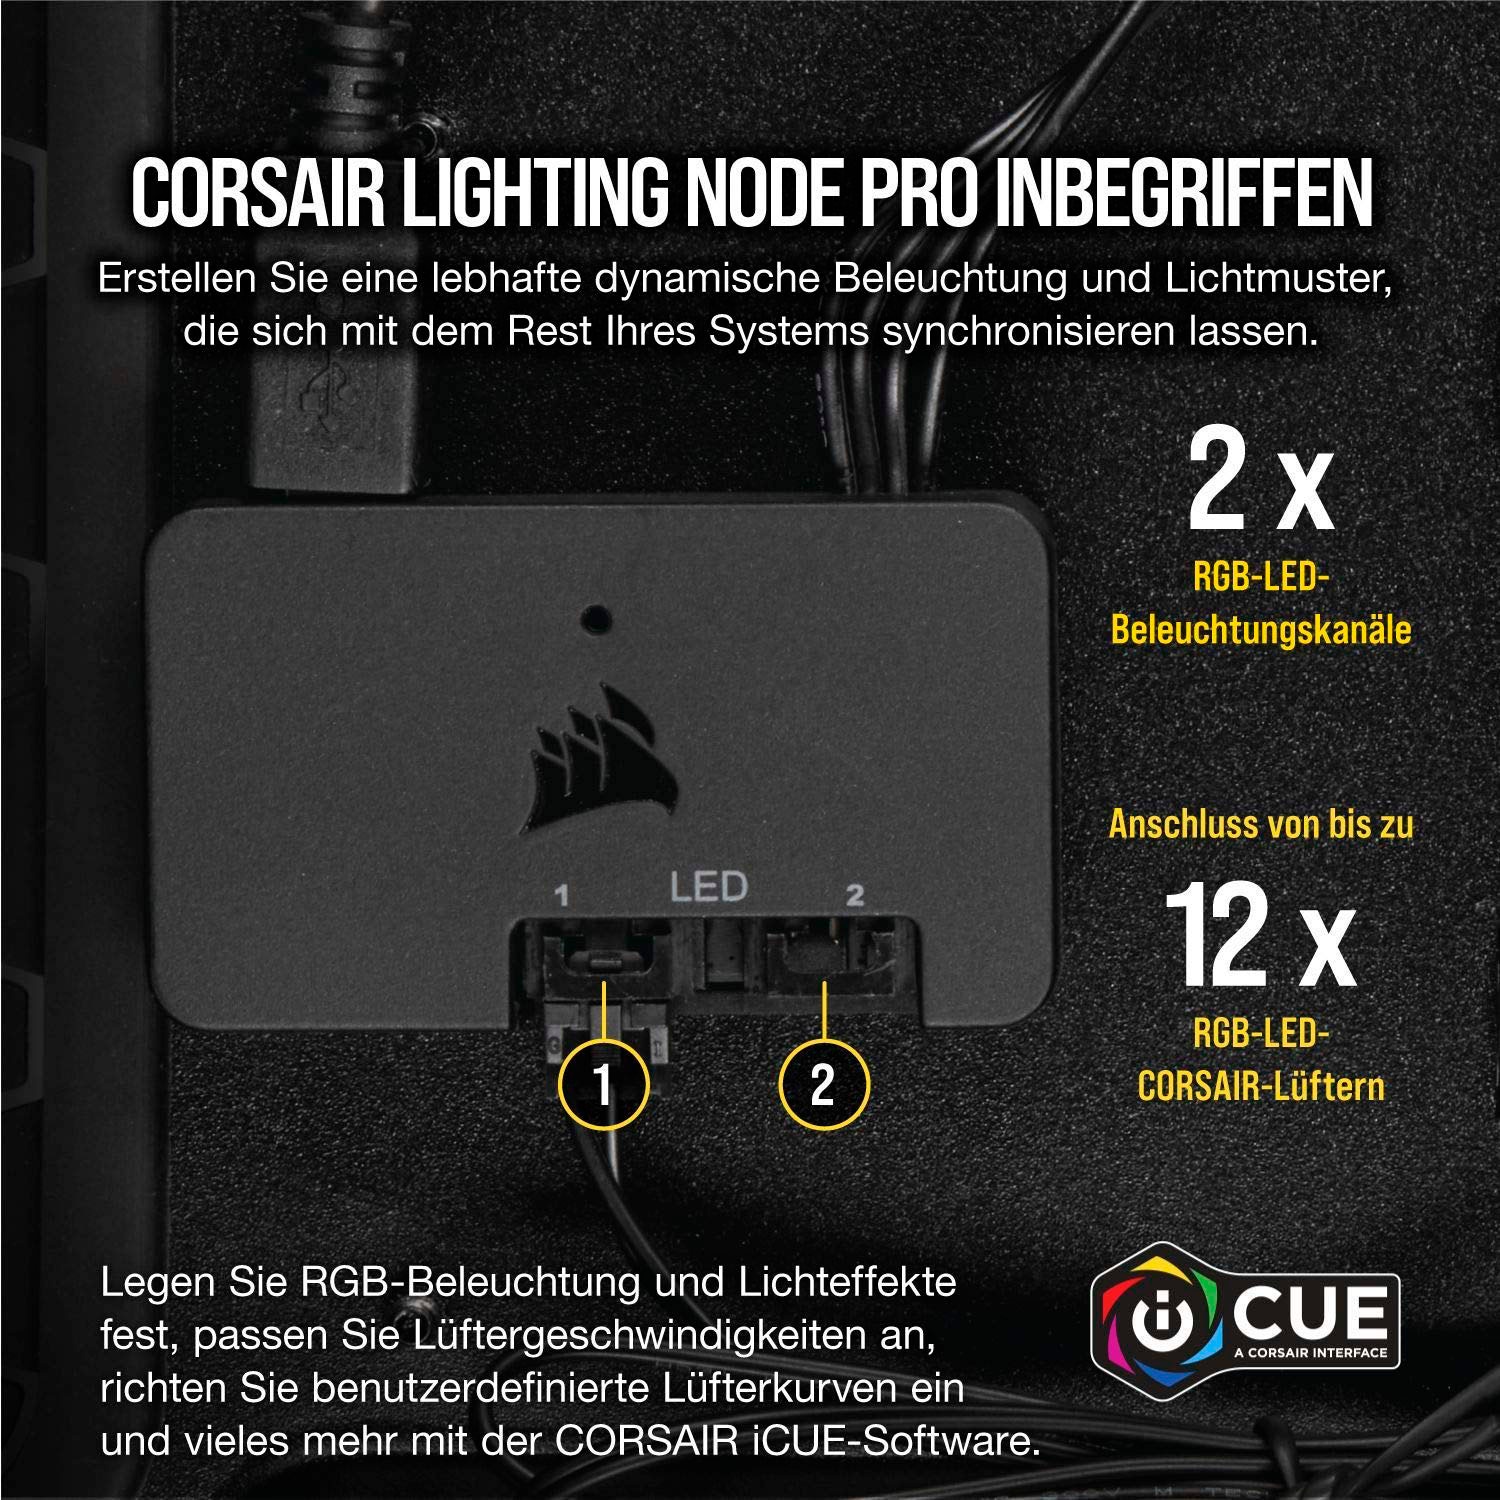 Corsair Computer-Kühler »Corsair LL140 RGB LED PWM PC-Gehäuselüfter«